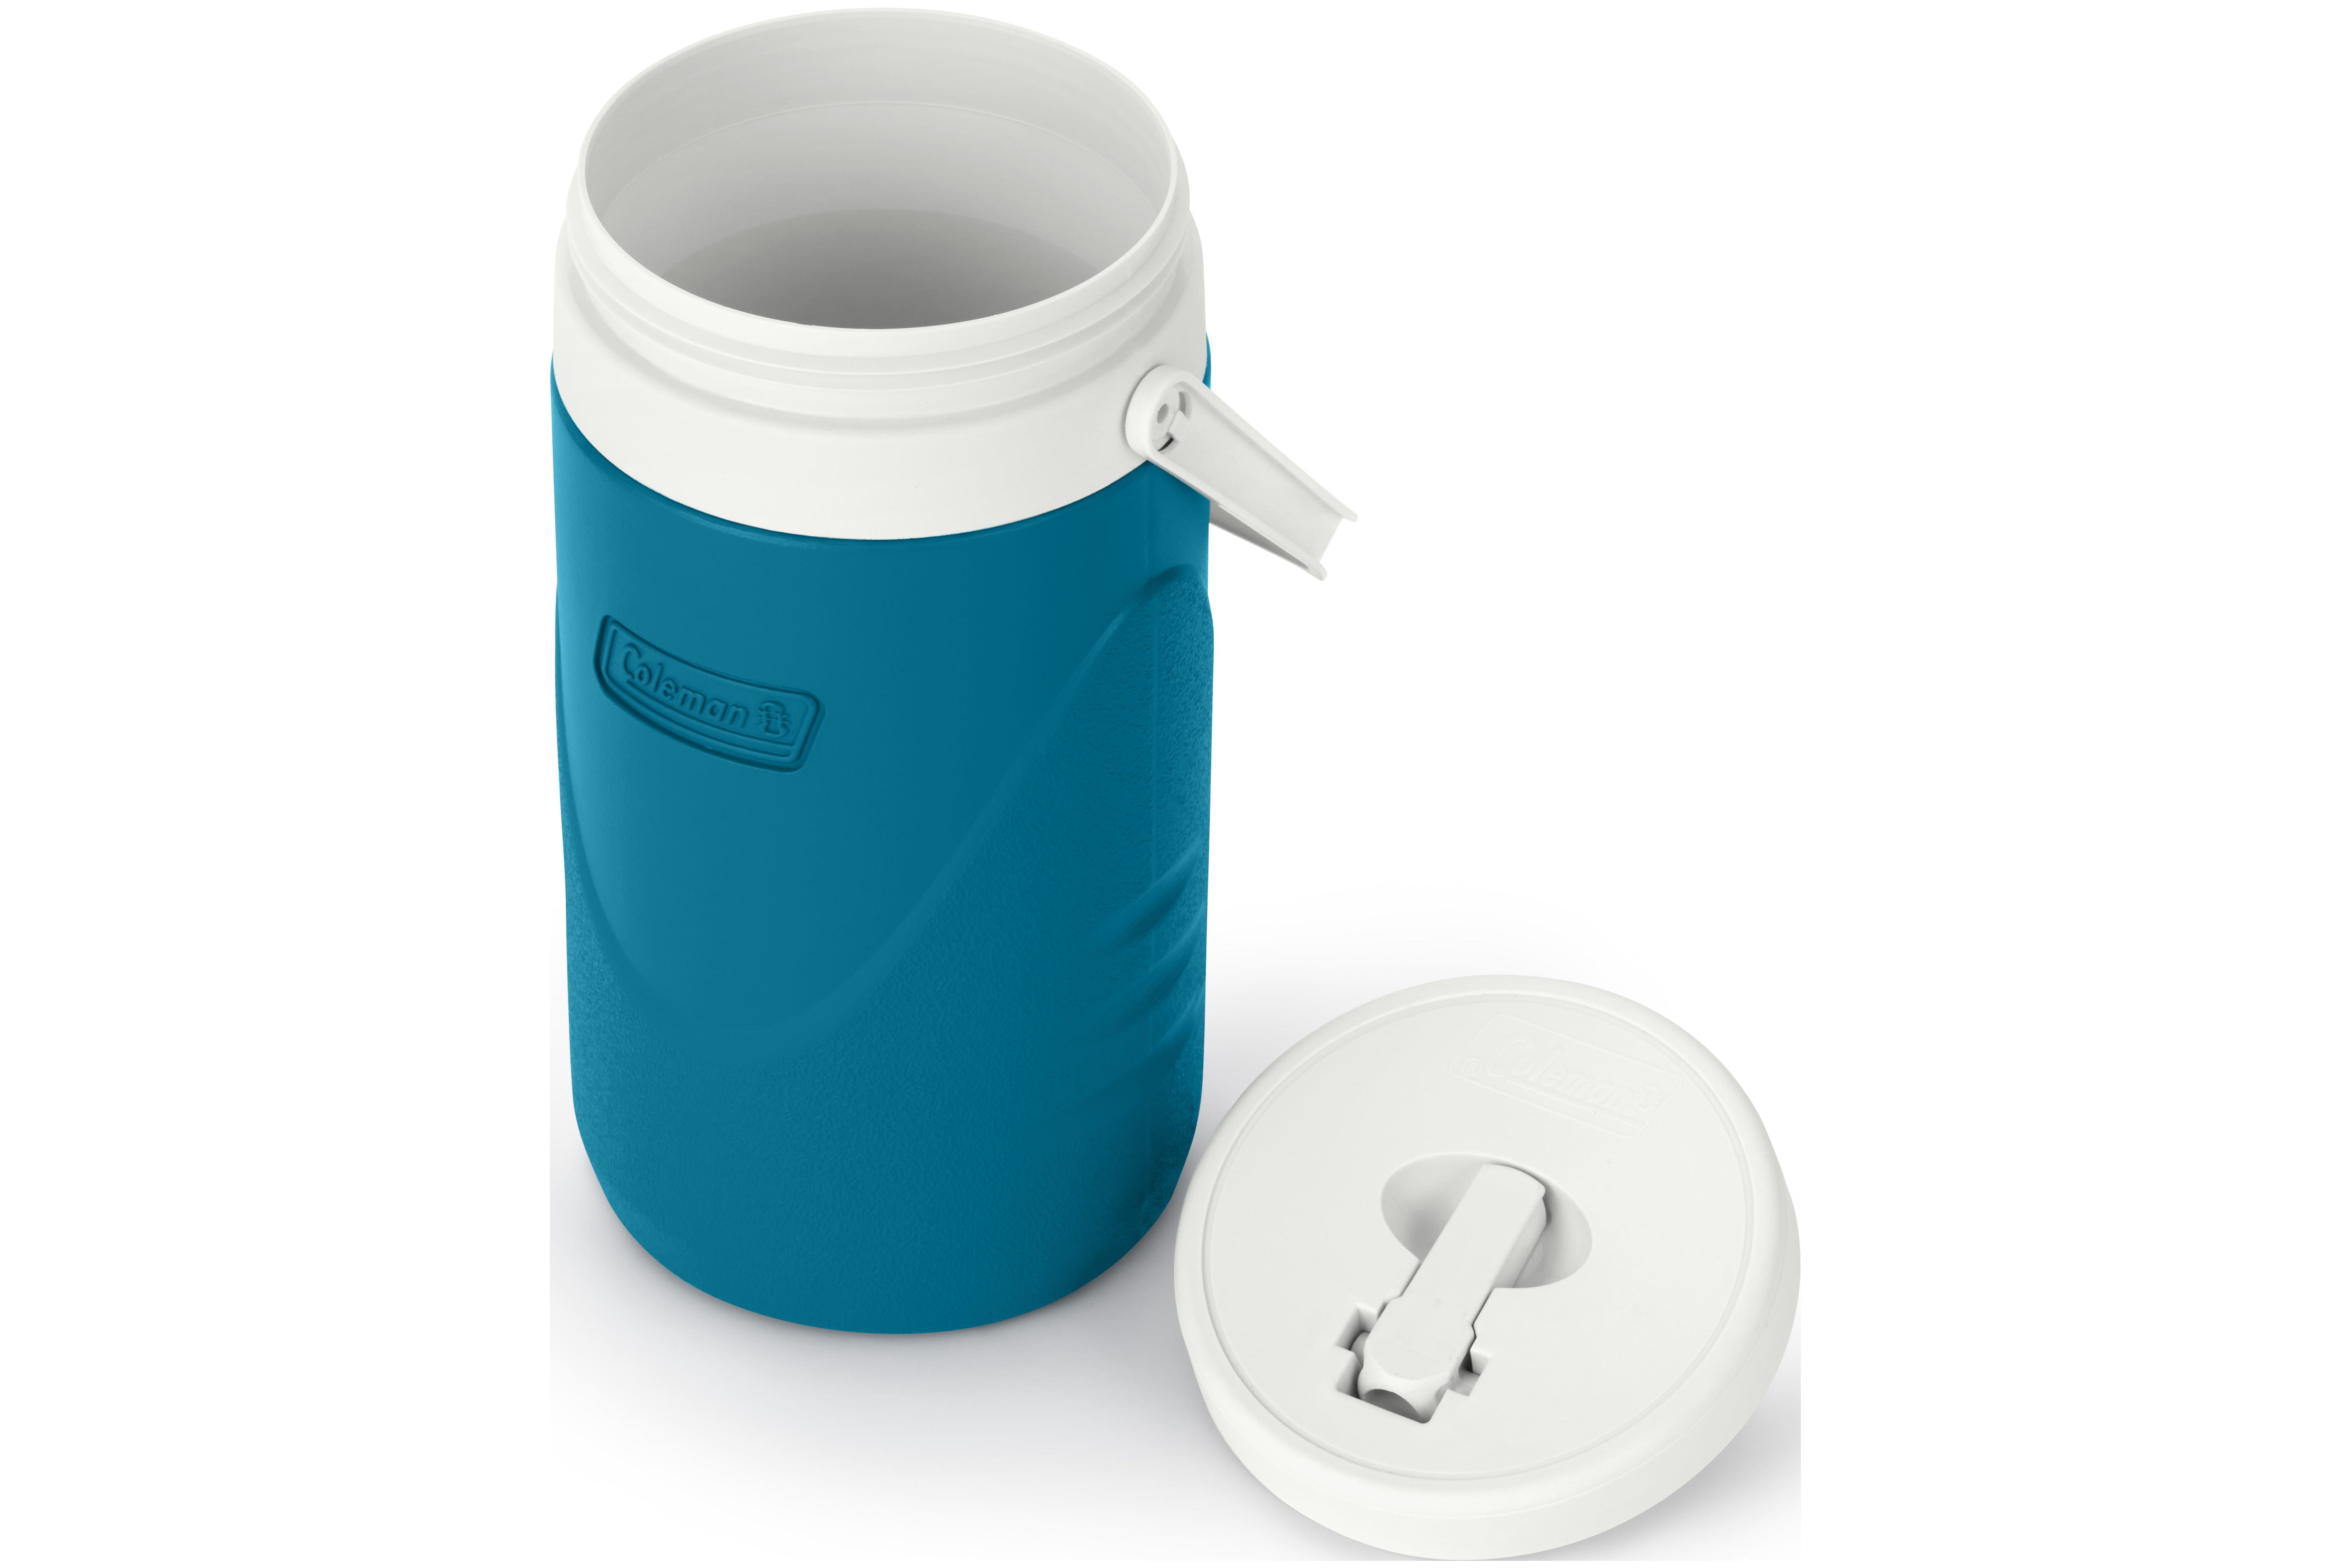 Coleman 1/2 Gallon Water Jug Beverage Cooler Rugged w/ Handle Blue